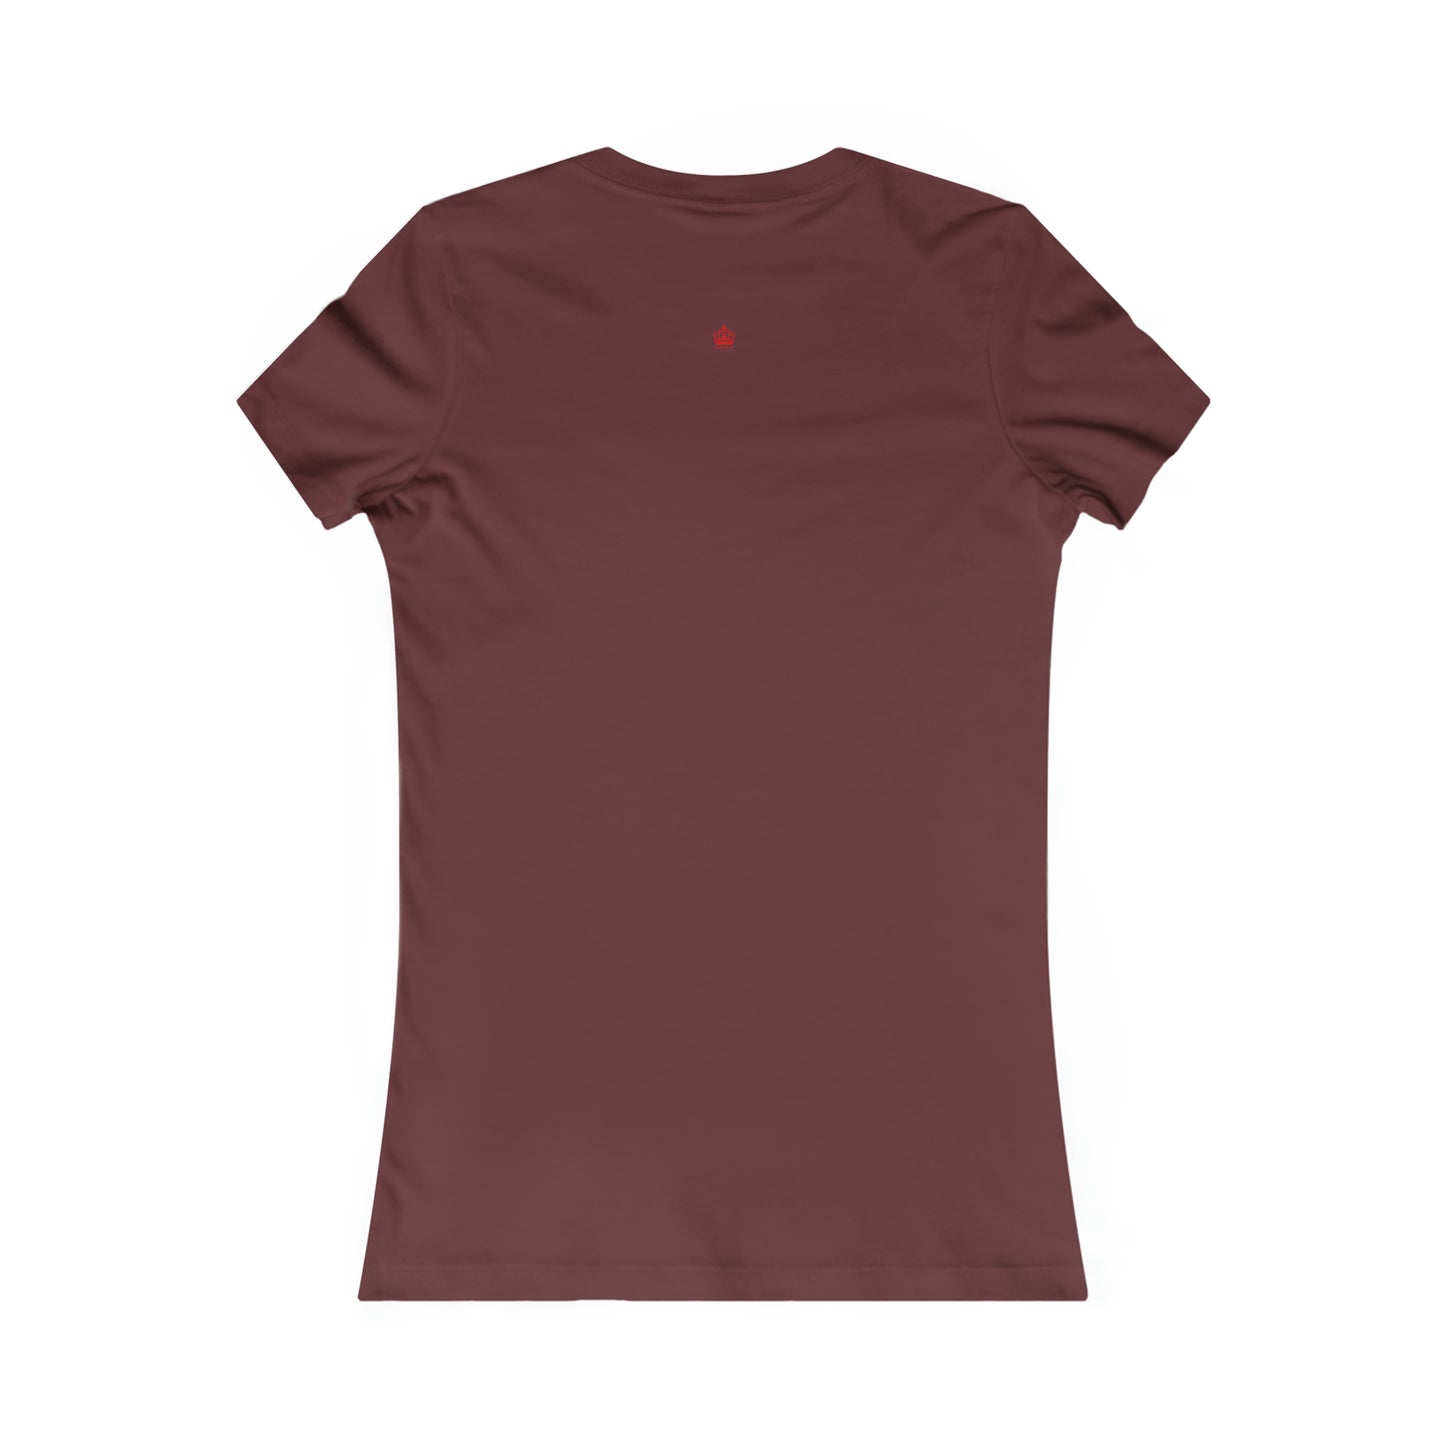 Maroon - Women's Favorite T Shirt - Burgundy Royal T